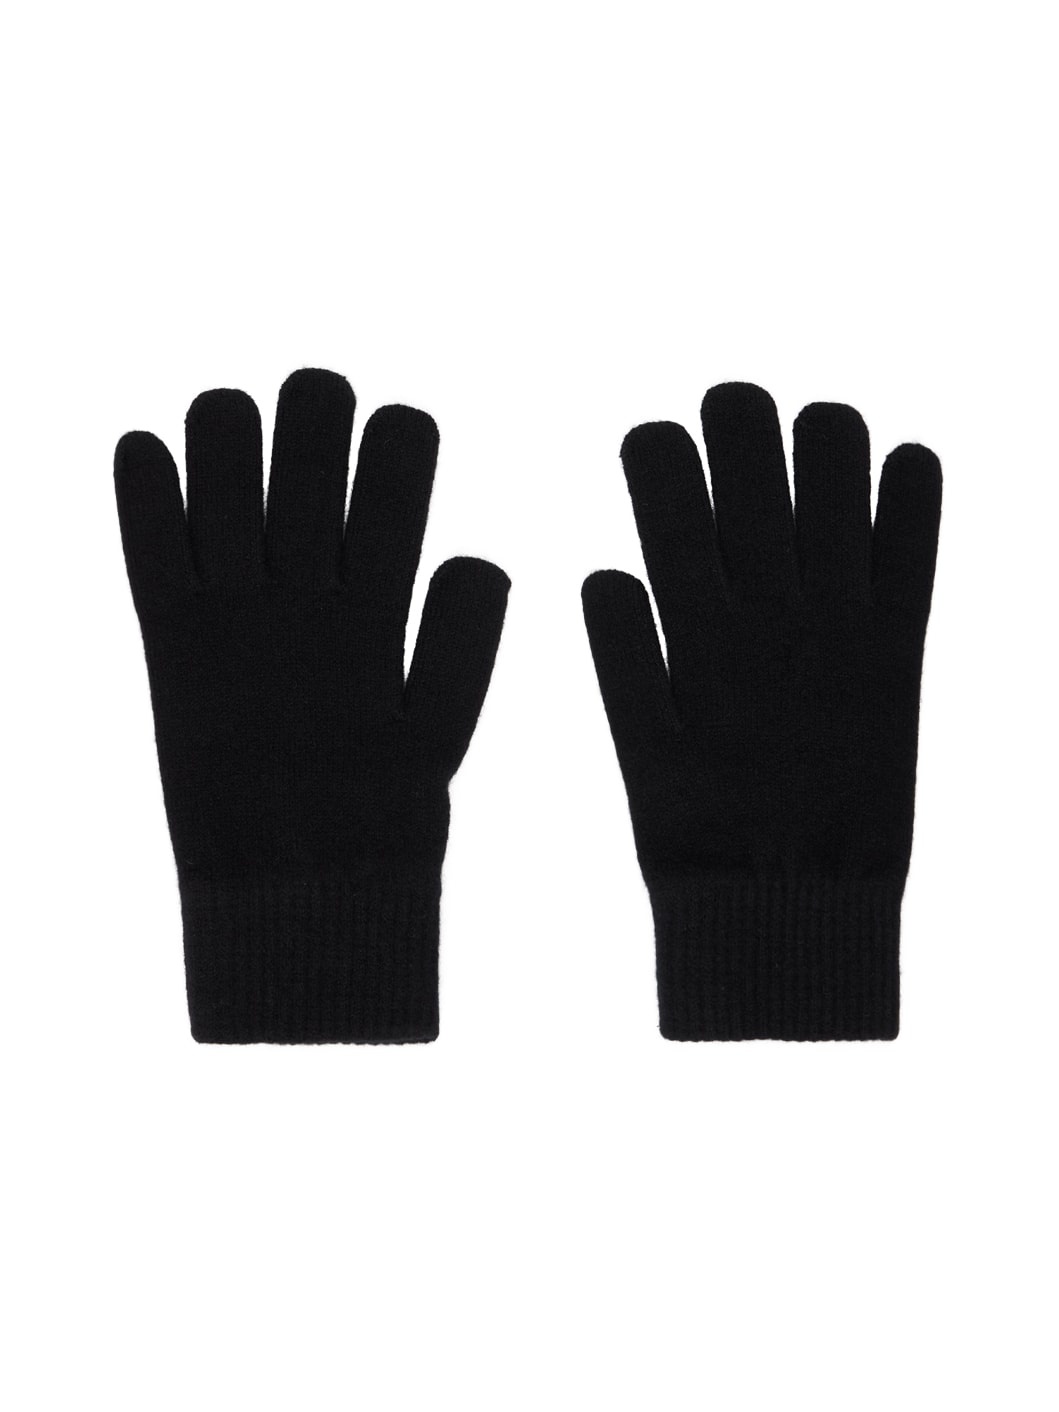 Black Embroidered Gloves - 1